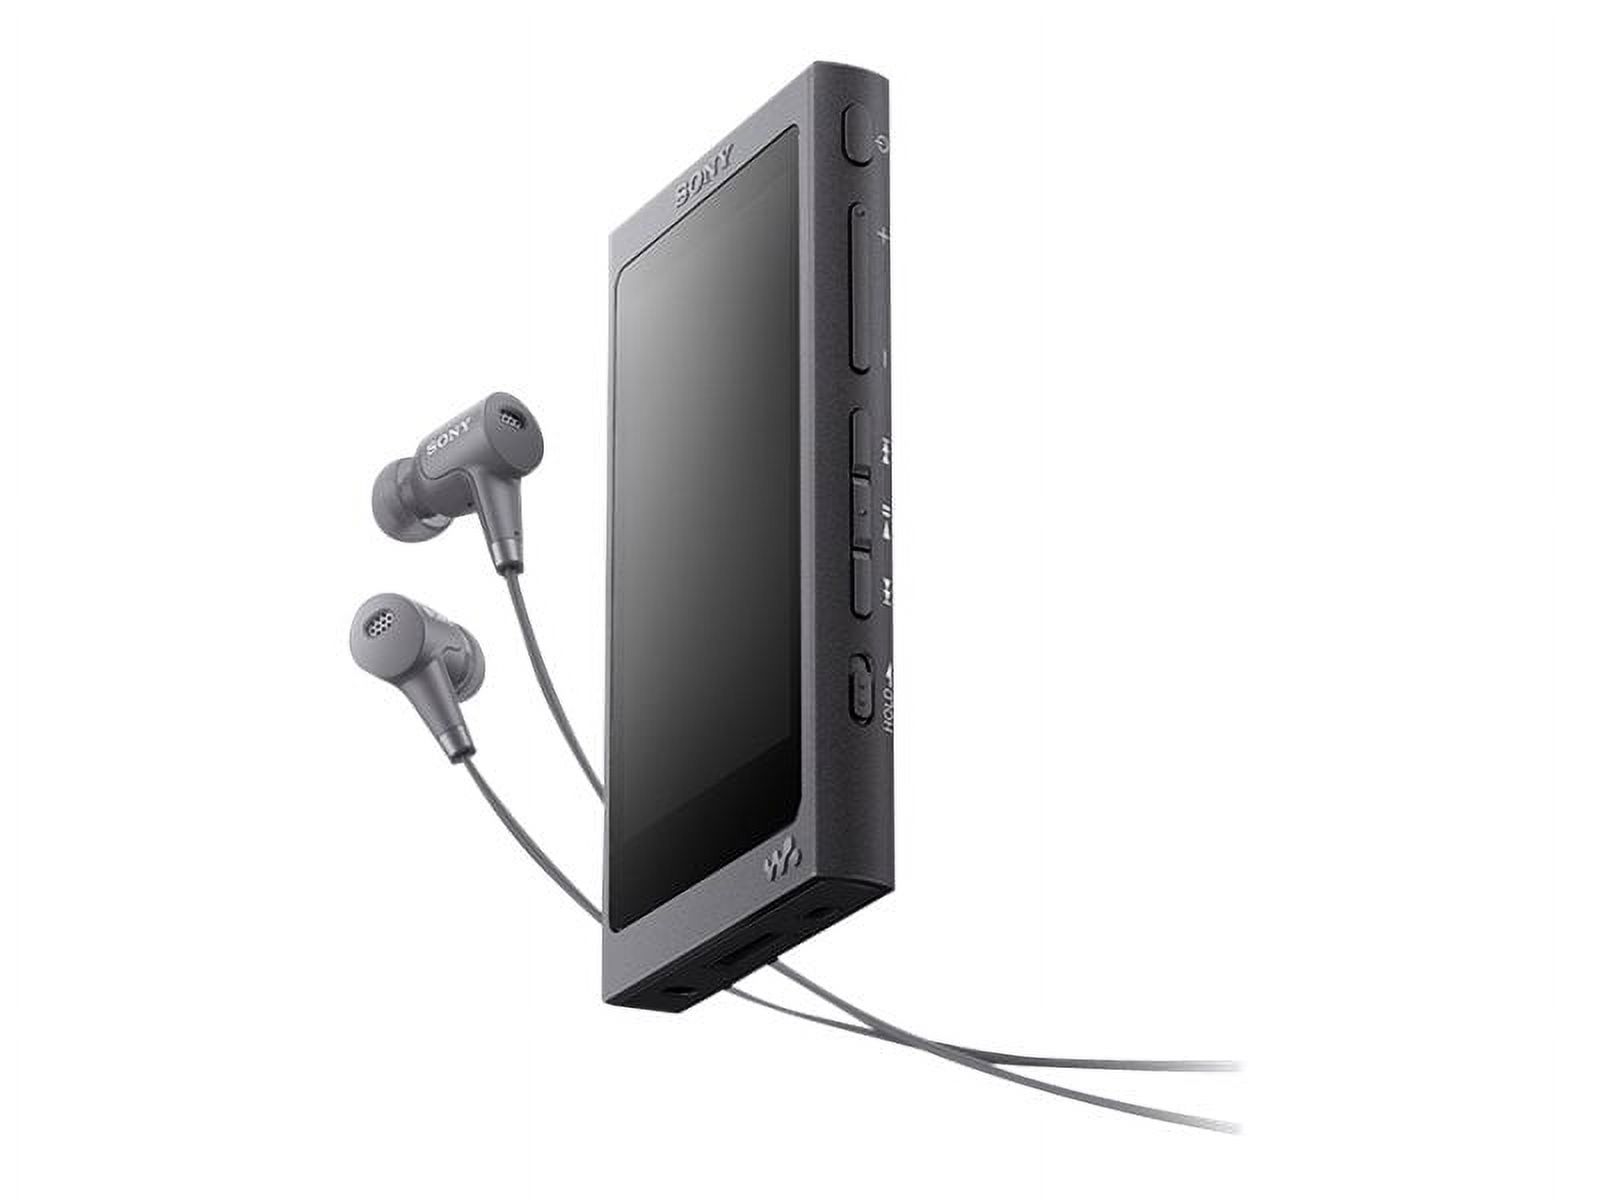 Sony Walkman NW-A45 - Digital player - 16 GB - grayish black - image 2 of 5